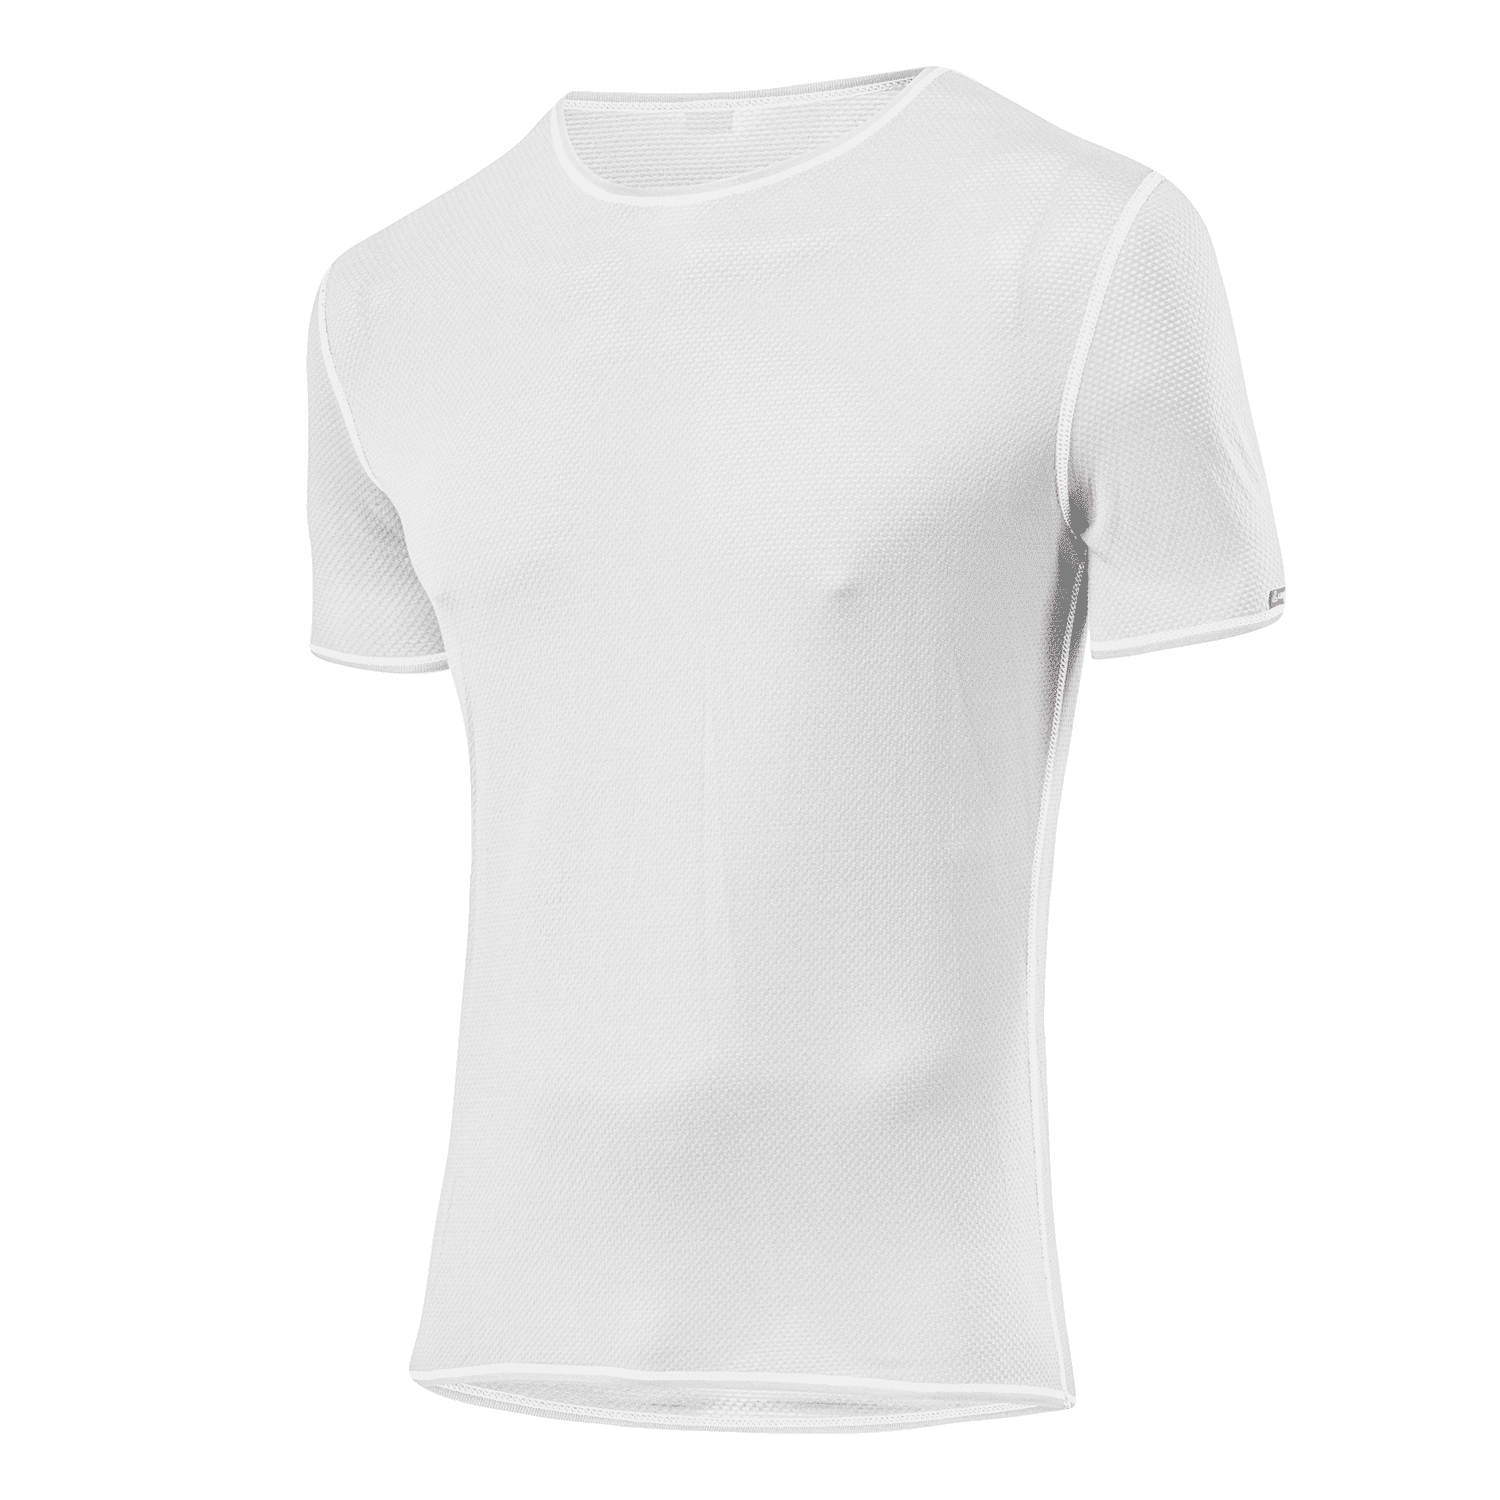 Löffler Shirt S/S Transtex Light - Camiseta técnica - Hombre